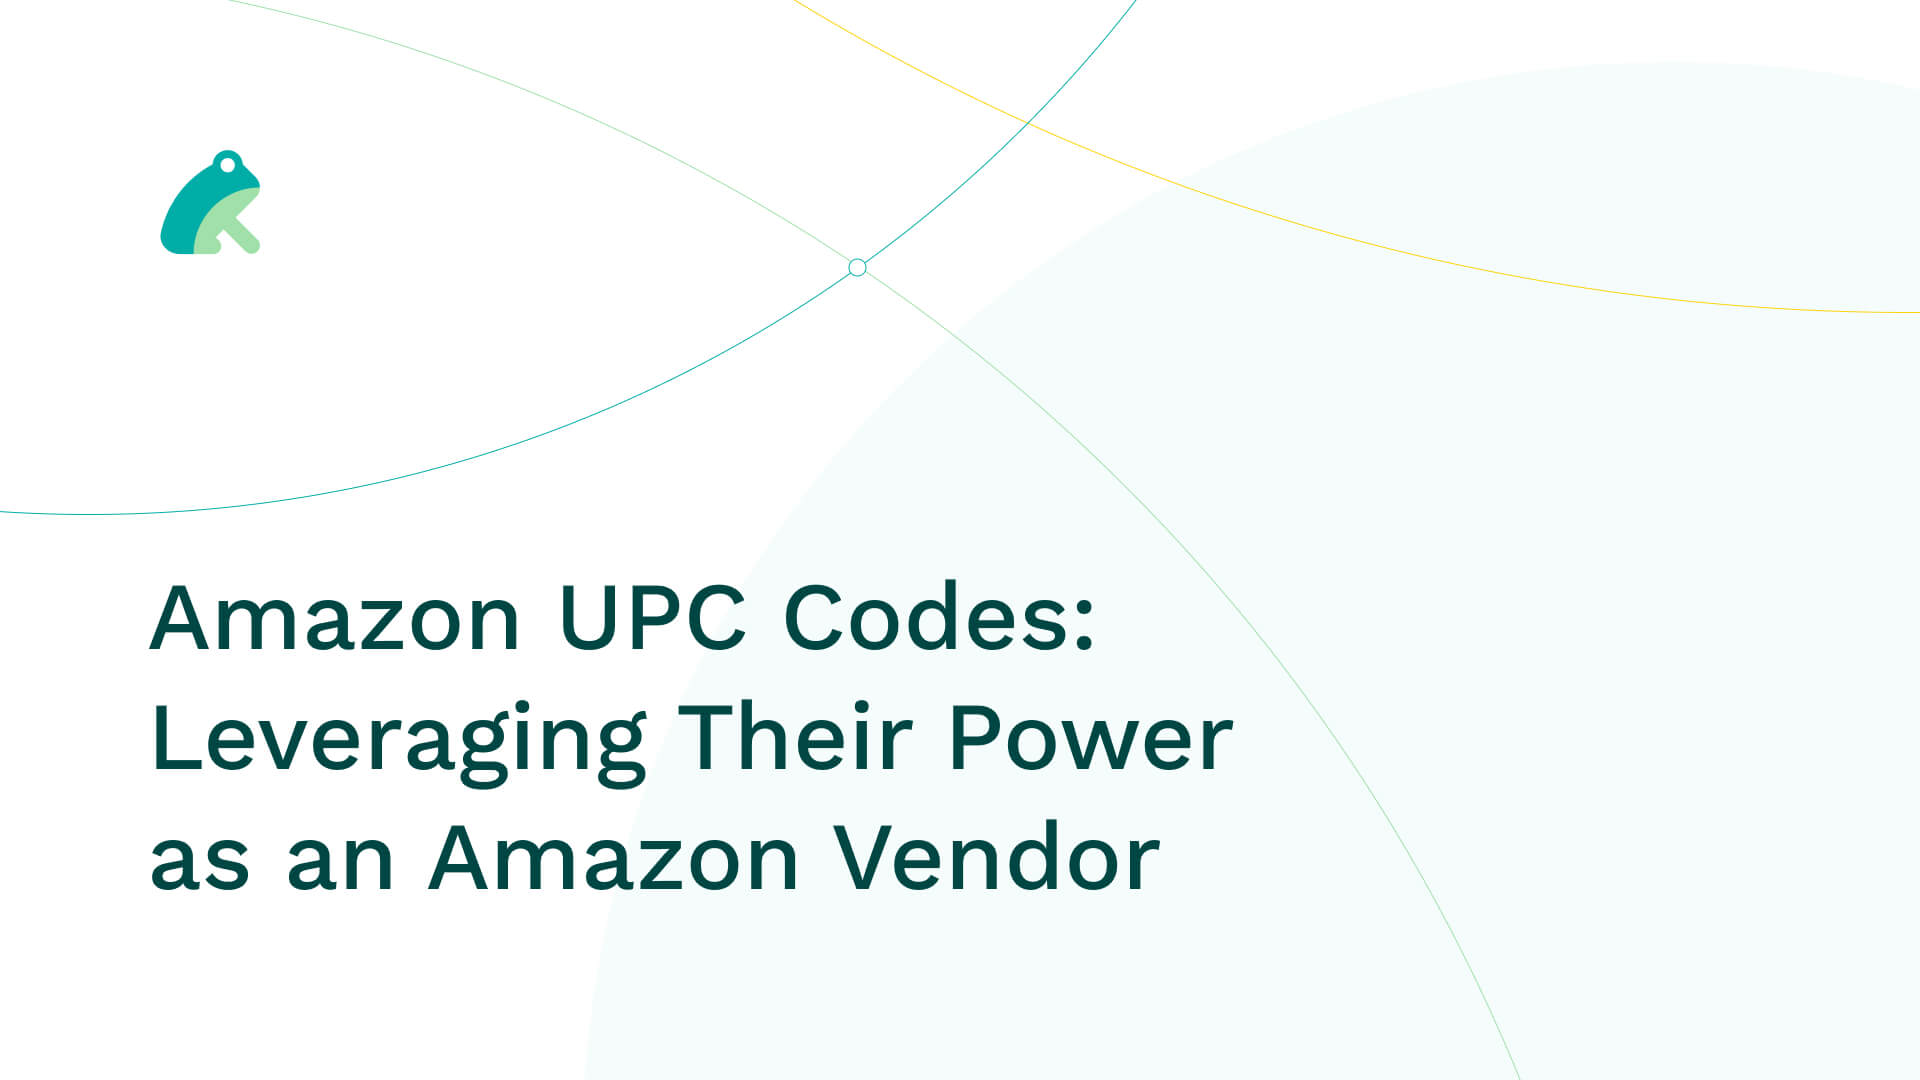 Amazon UPC Codes: Leveraging Their Power as an Amazon Vendor